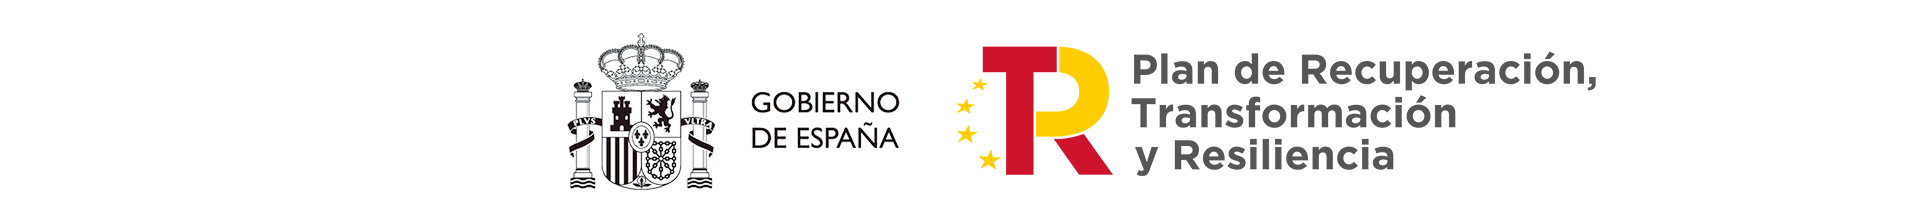 Logos Gobierno de España - Plan de Recuperación, Transformación y Resiliencia